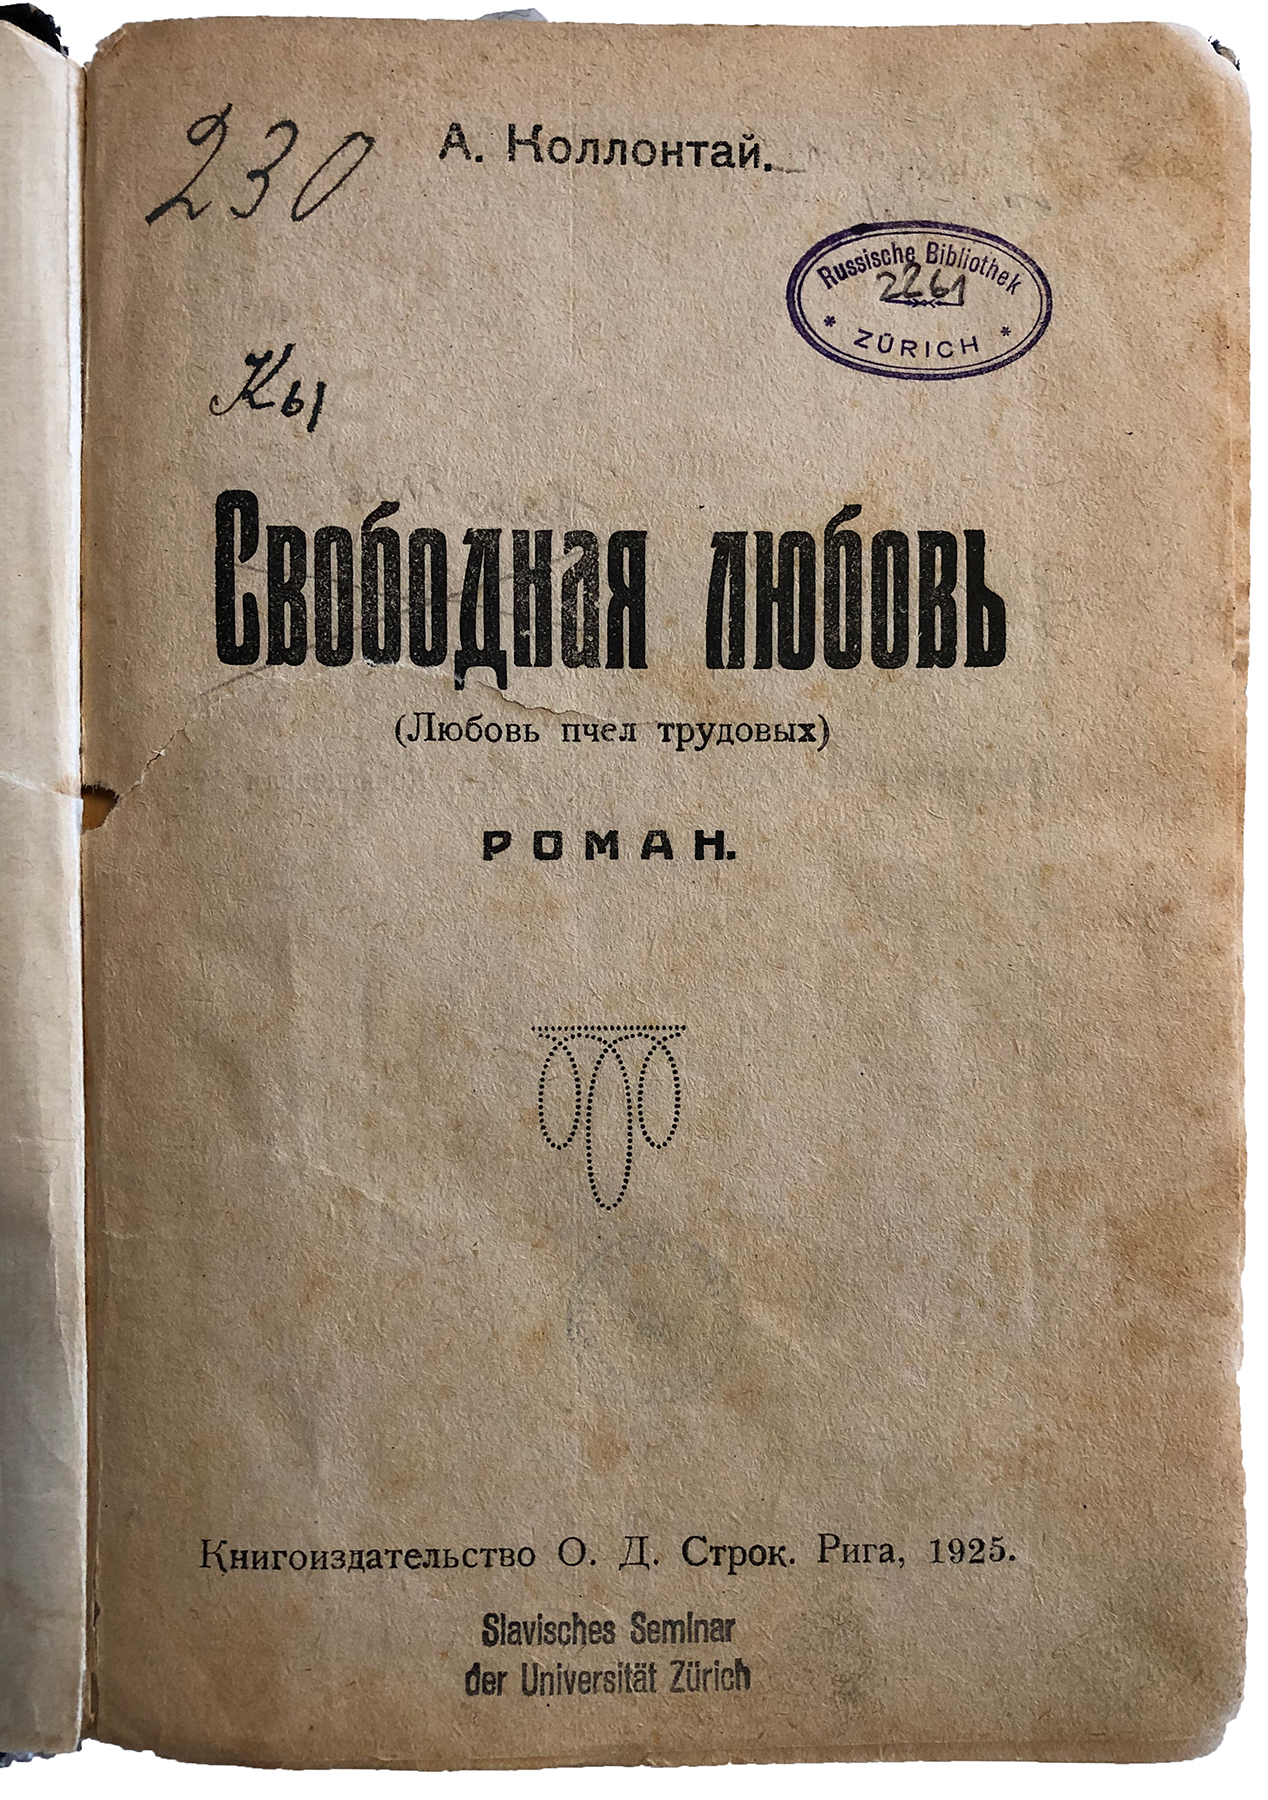 Svobodnaja ljubovʹ (ljubovʹ pčel trudovych) by Alexandra Kollontai, Riga 1925; Shelf mark RBC 2261. (Image: ZB Zürich)